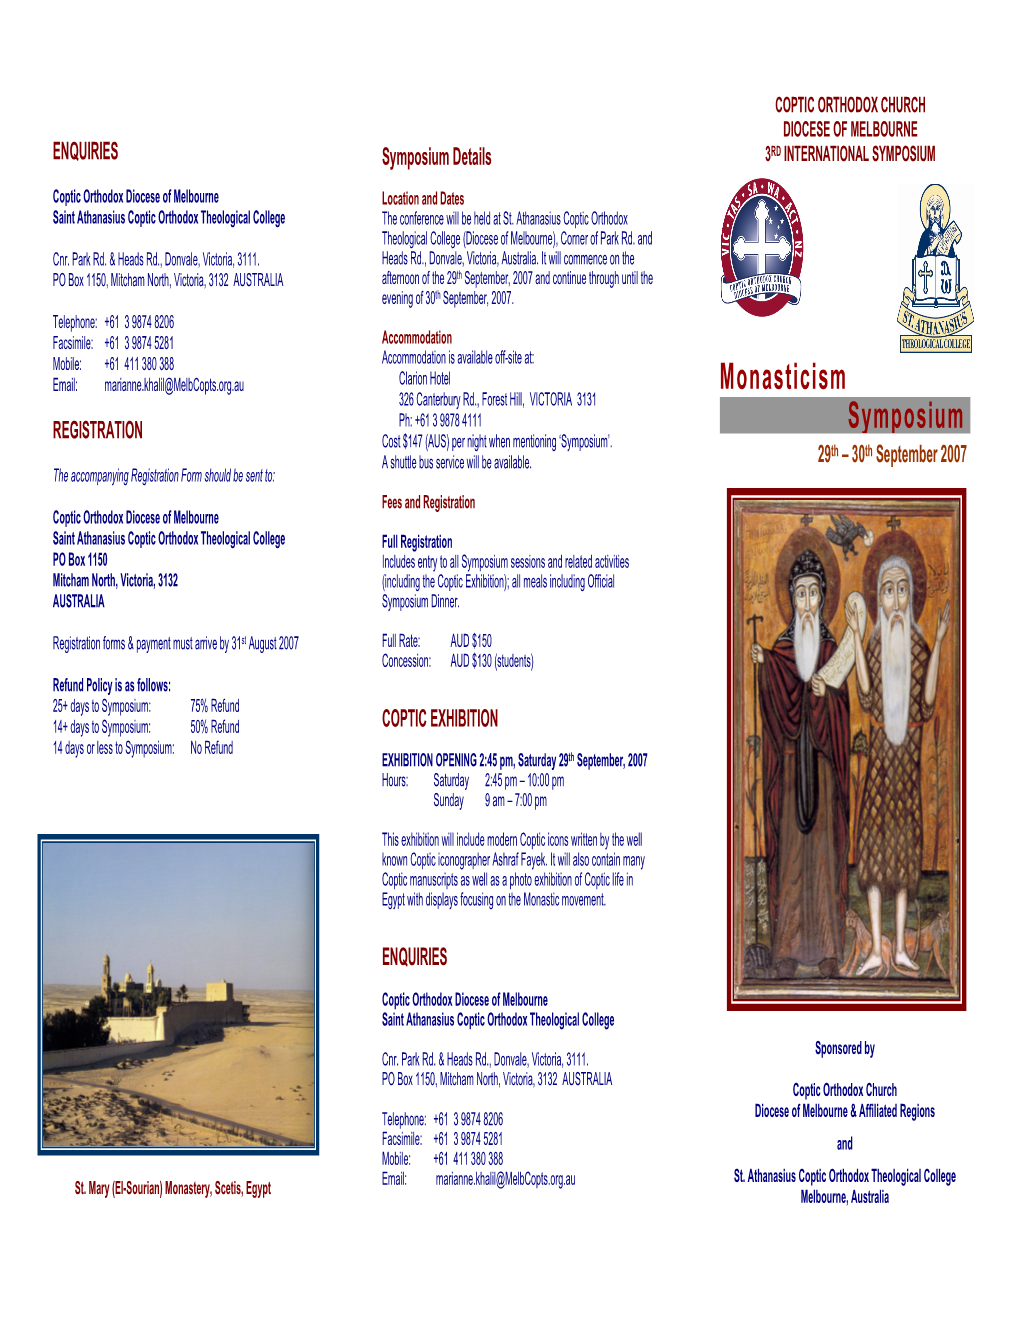 Monasticism Symposium of the Ancient World